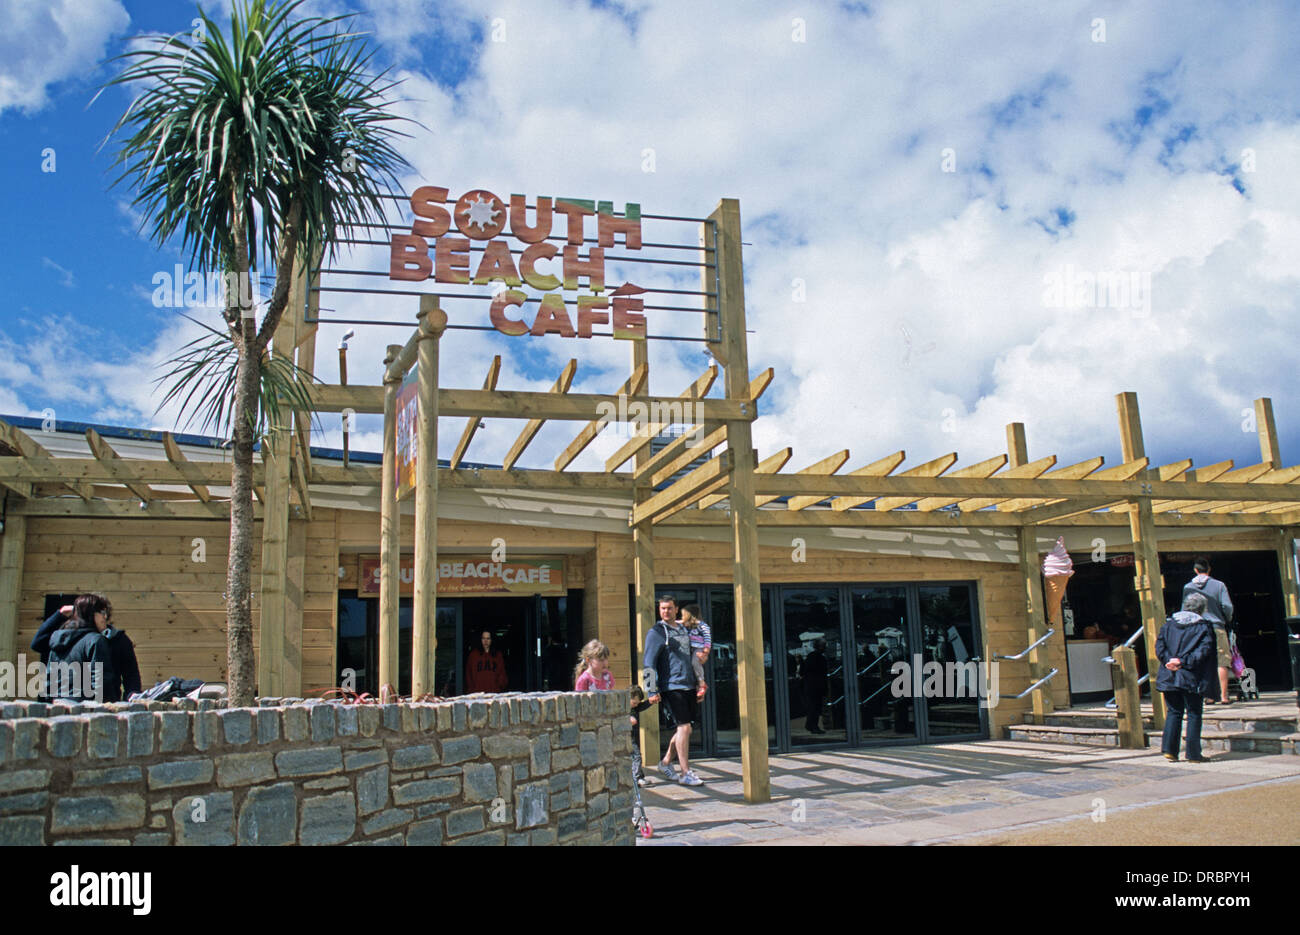 South Beach Cafe at the Haven Sandy Bay caravan site, Devon Cliffs, near Exmouth, Devon, England, UK Stock Photo